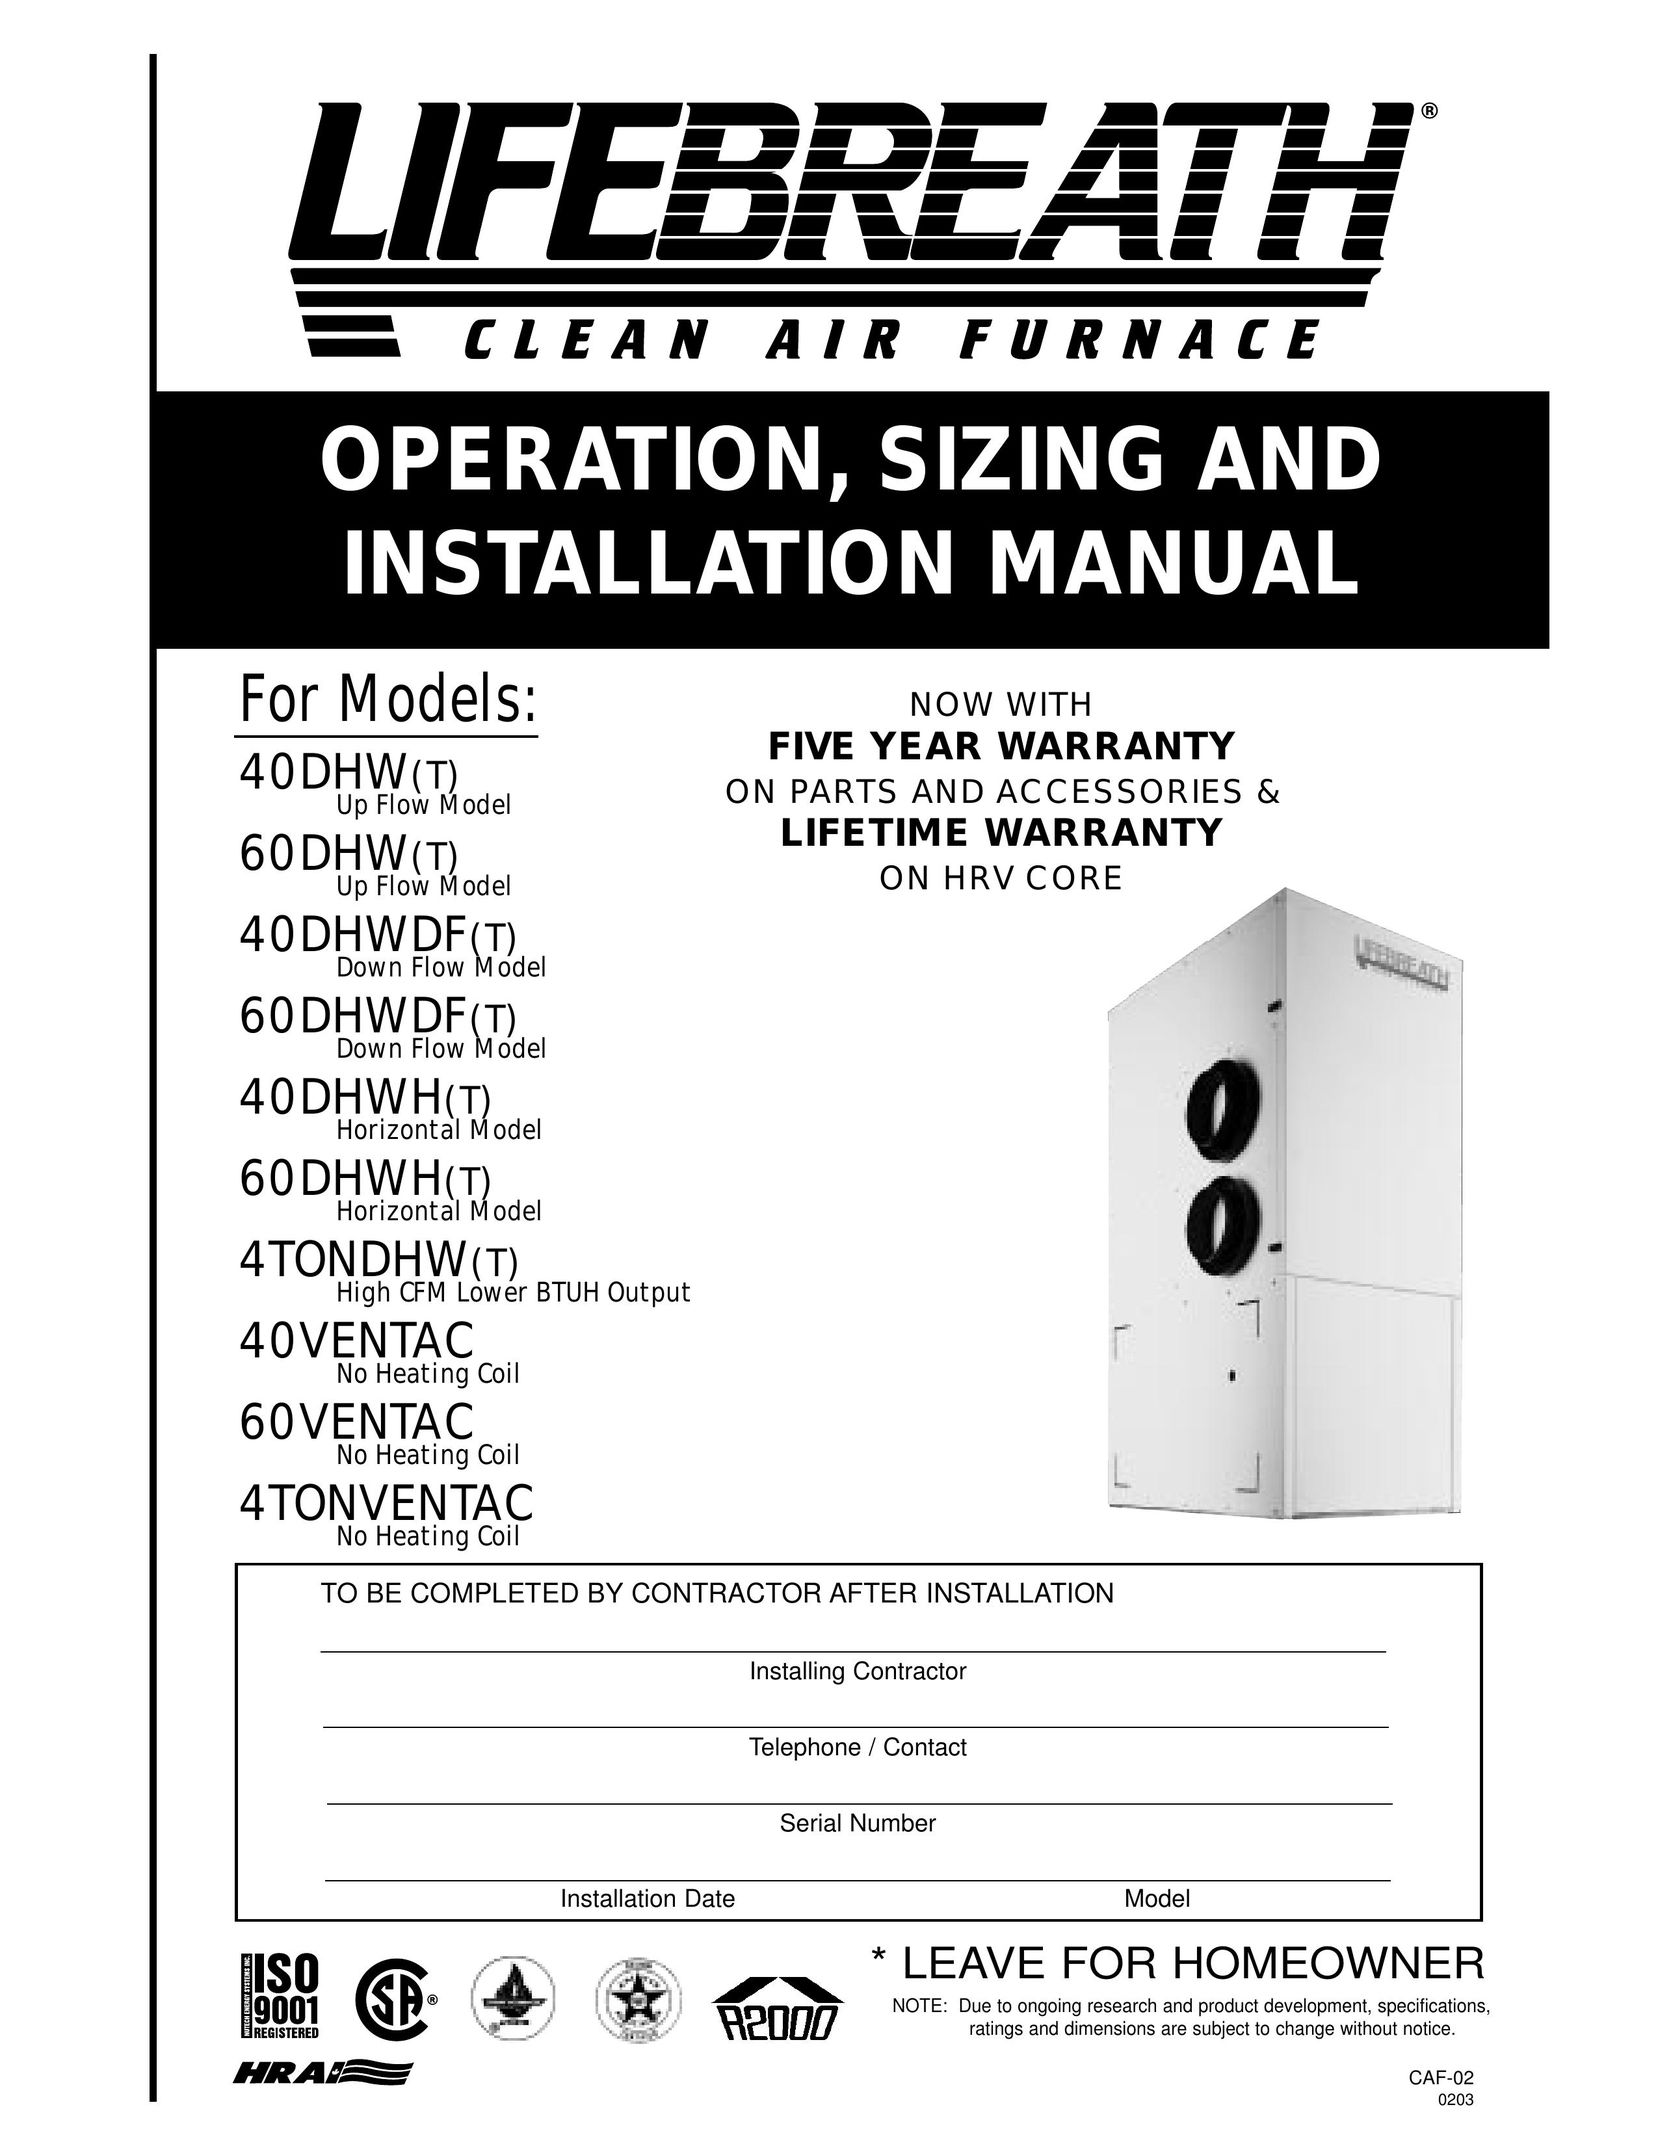 Lifebreath 40VENTAC Thermostat User Manual